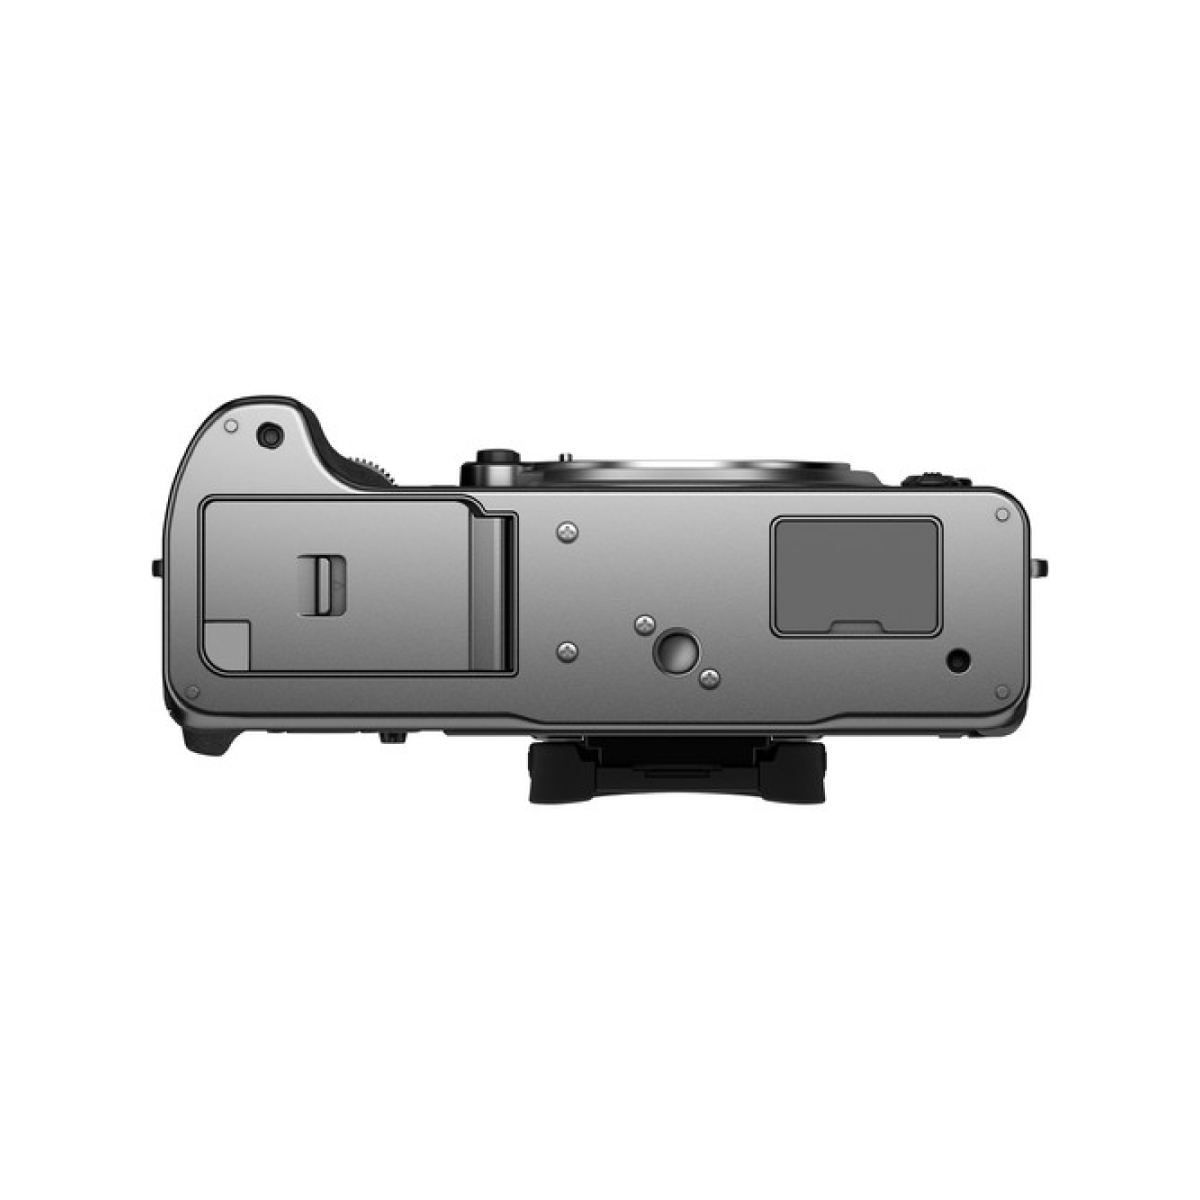 Fujifilm X-T4 26 MP Mirrorless Camera Body with XF16-80mm Lens – Silver (8)